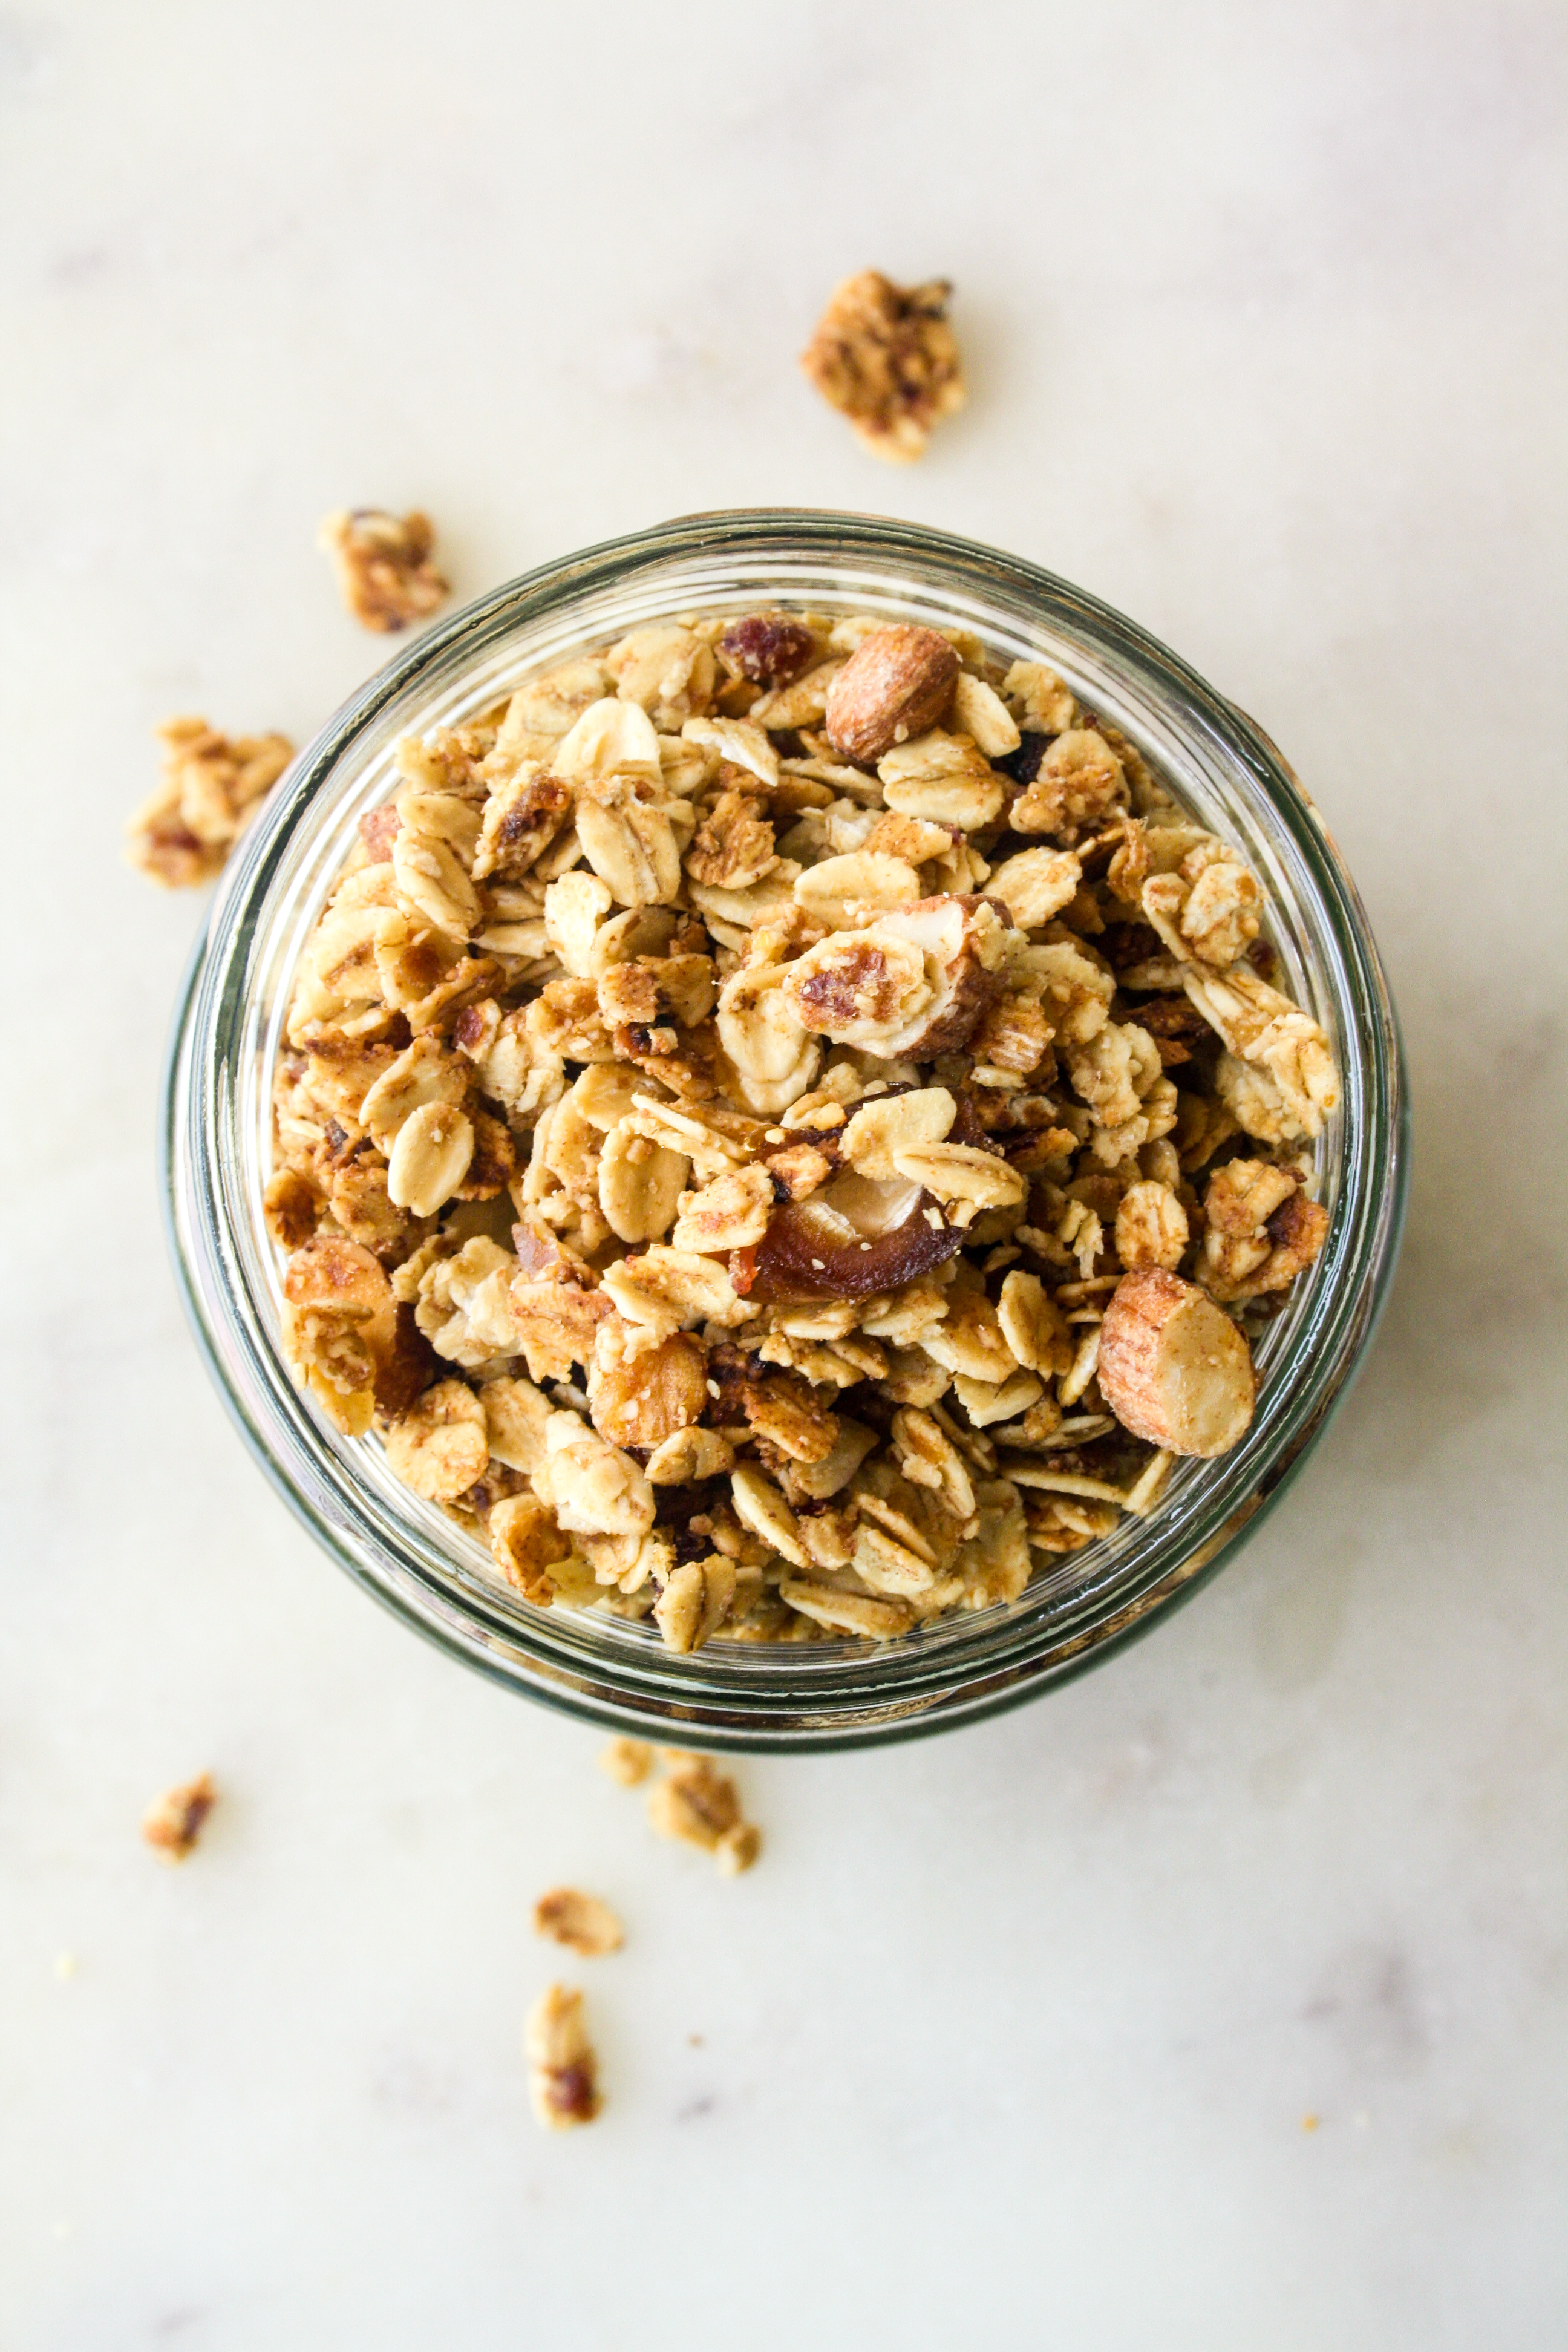 Crunchy vegan, gluten-free date and almond granola with yoghurt, bananas and cherries